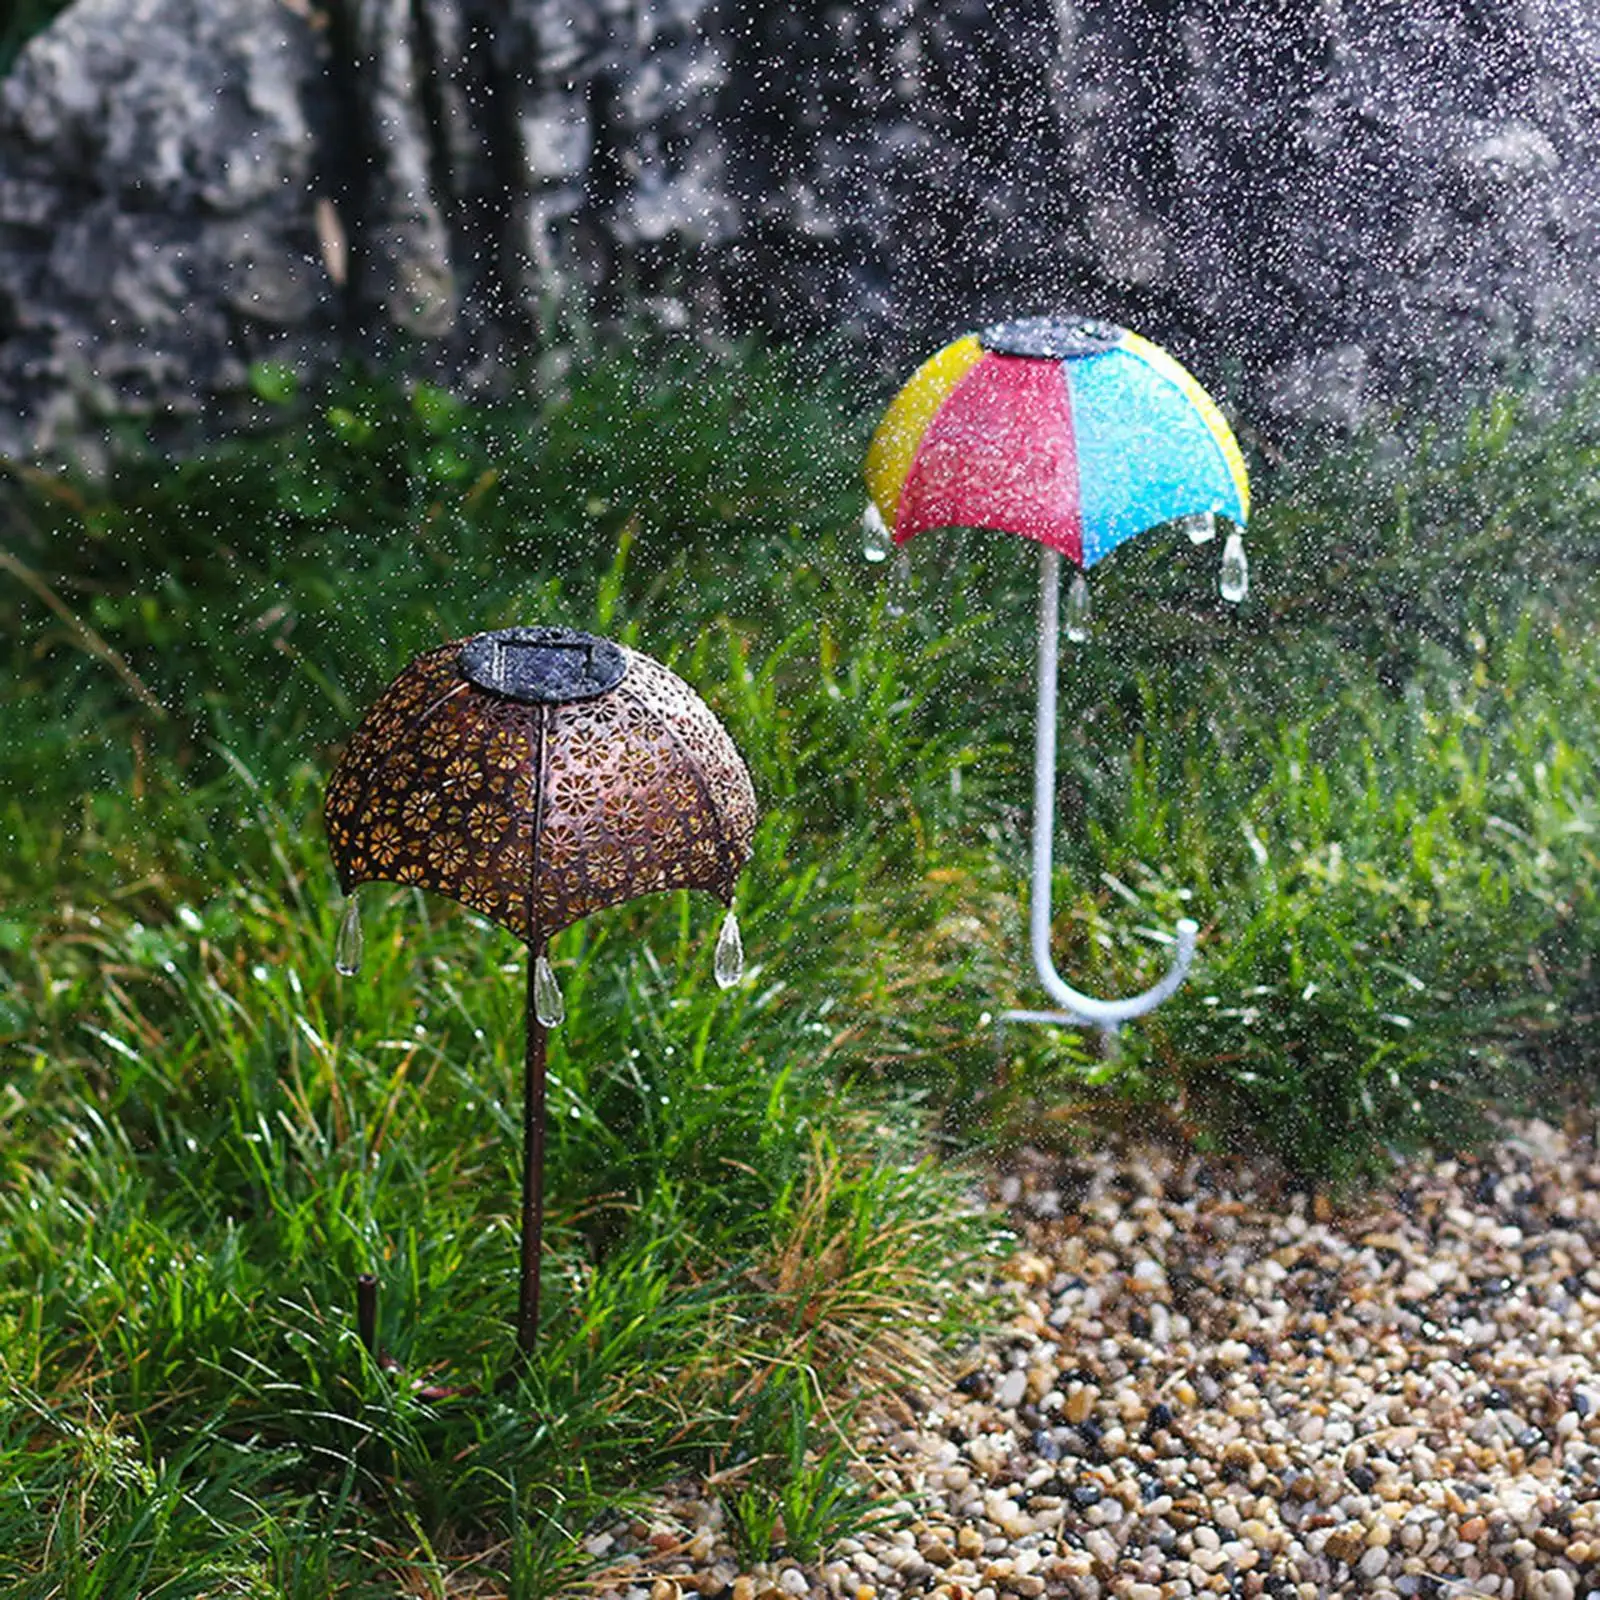 Umbrella Shaped Garden Lamp Landscape Lamp Stake Light for Courtyard Walkway